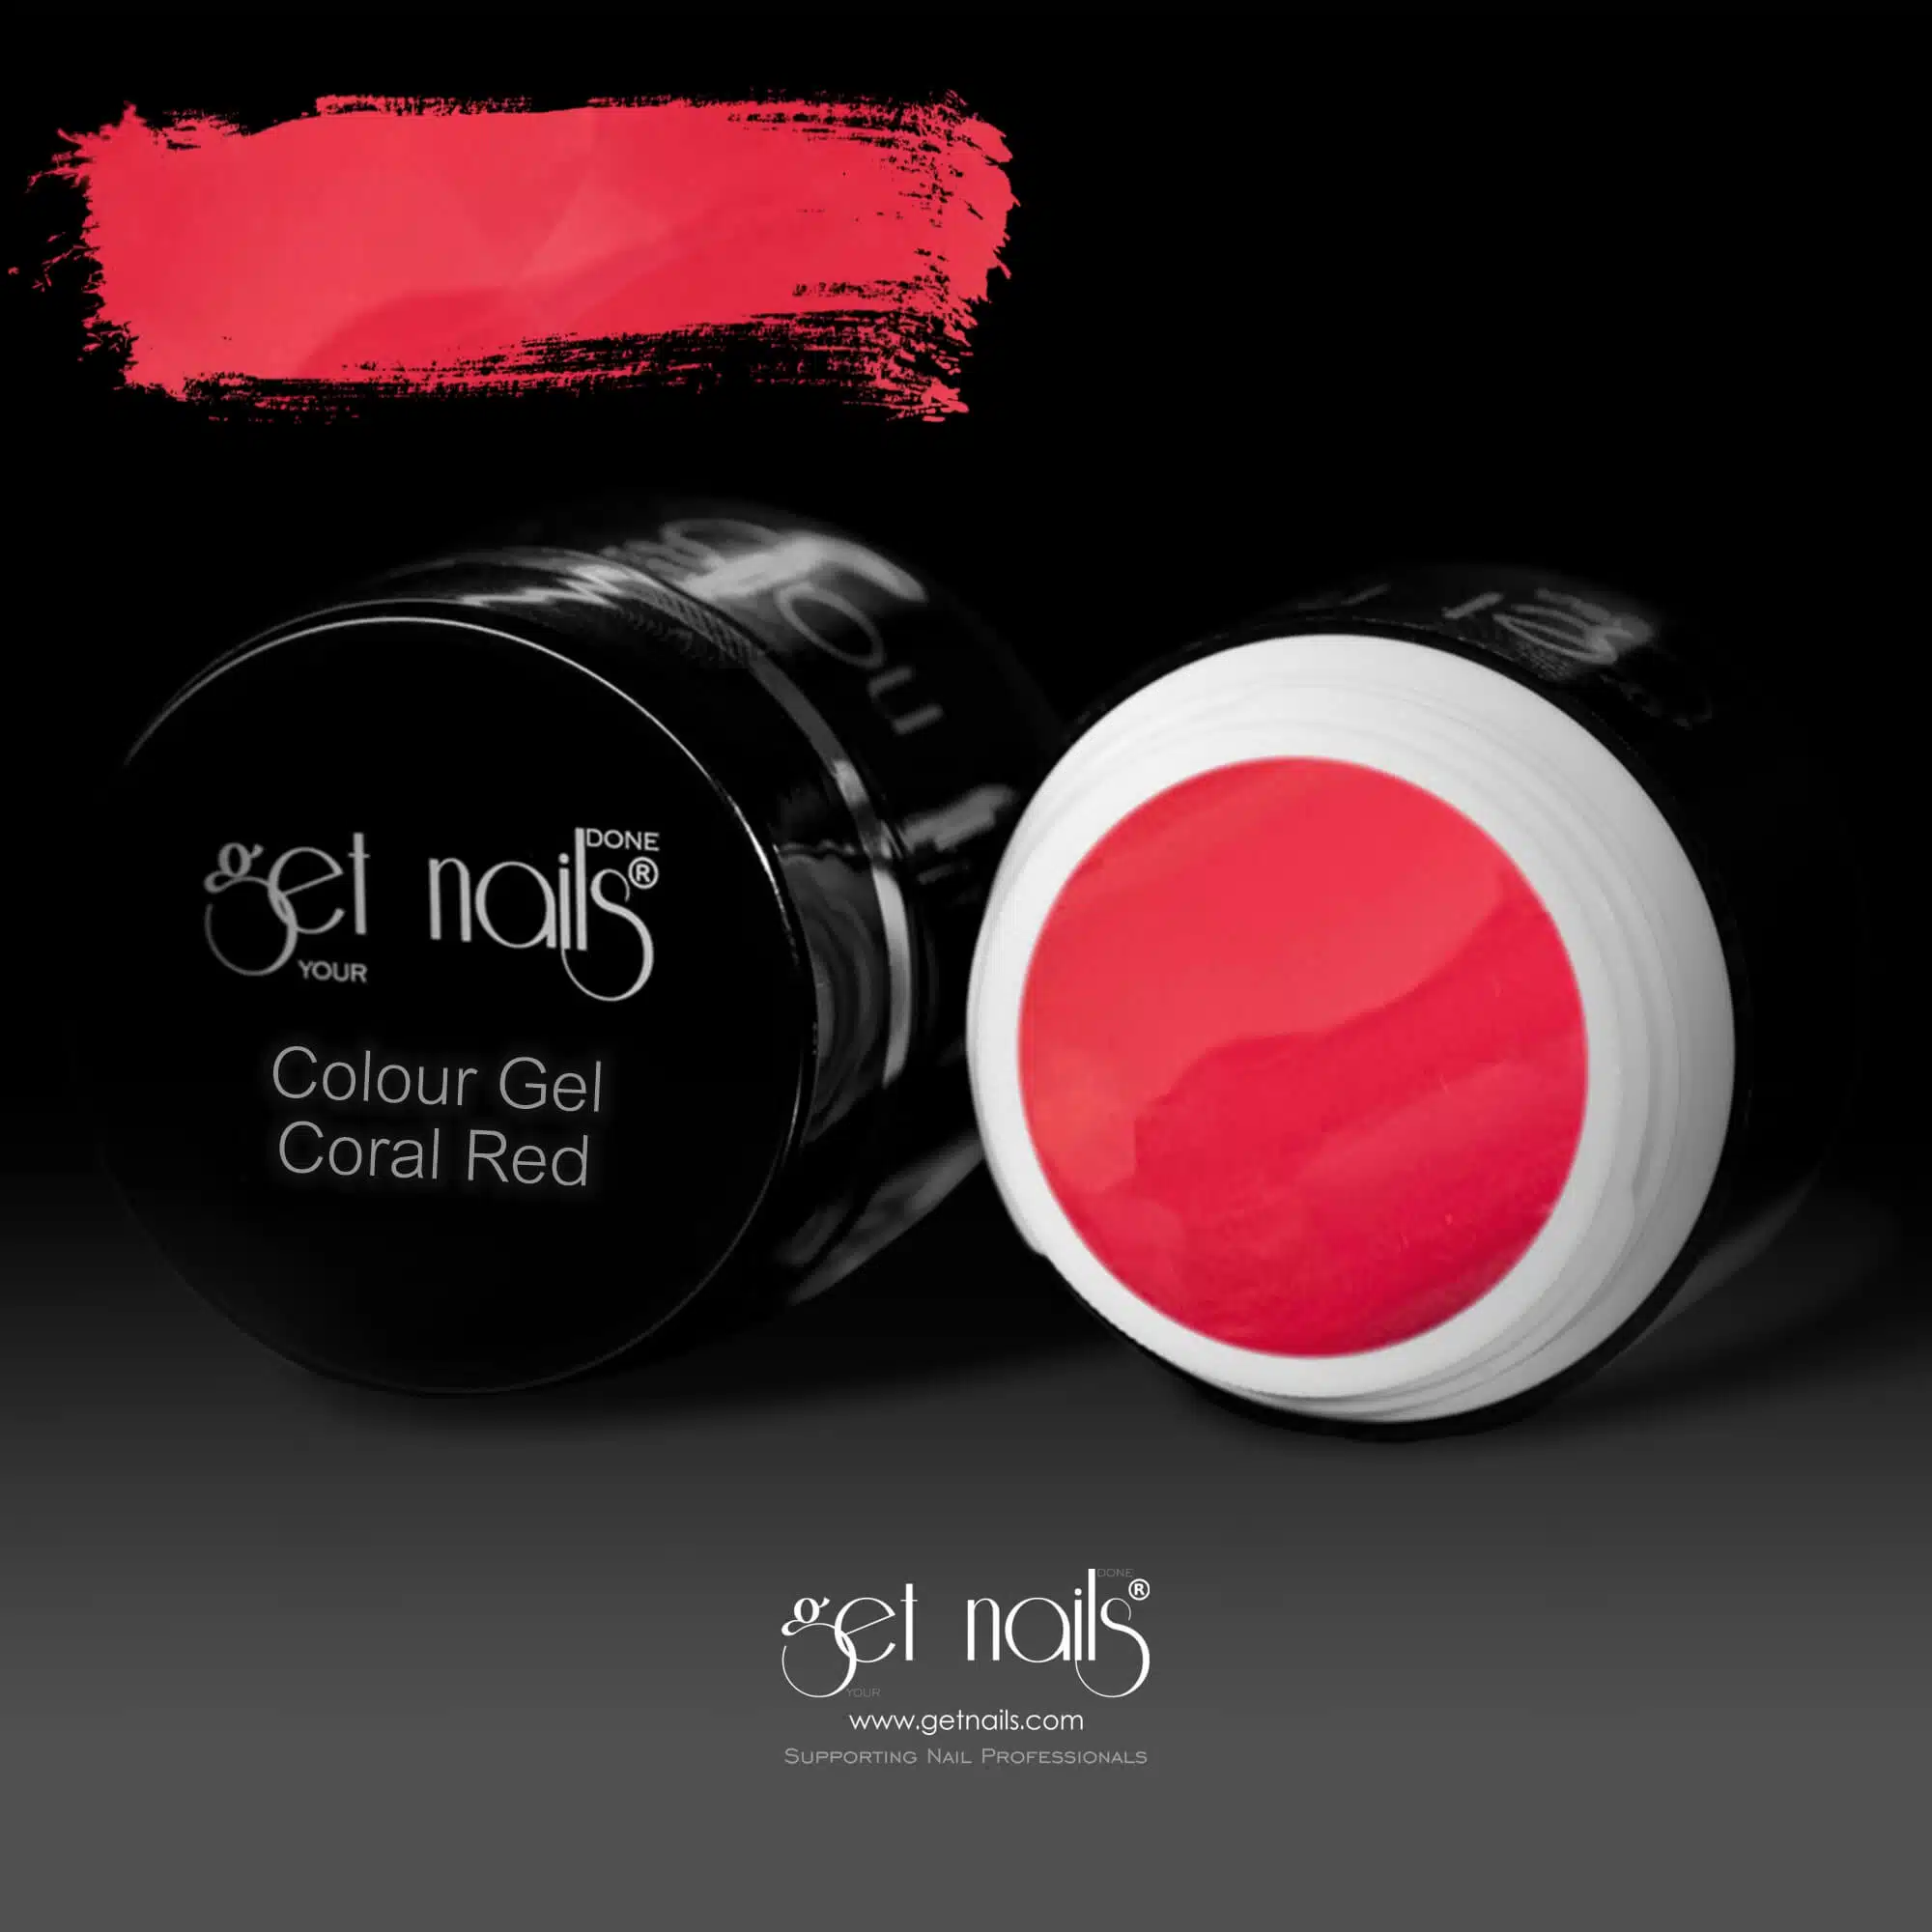 Get Nails Austria - Colour Gel Coral Red 5g